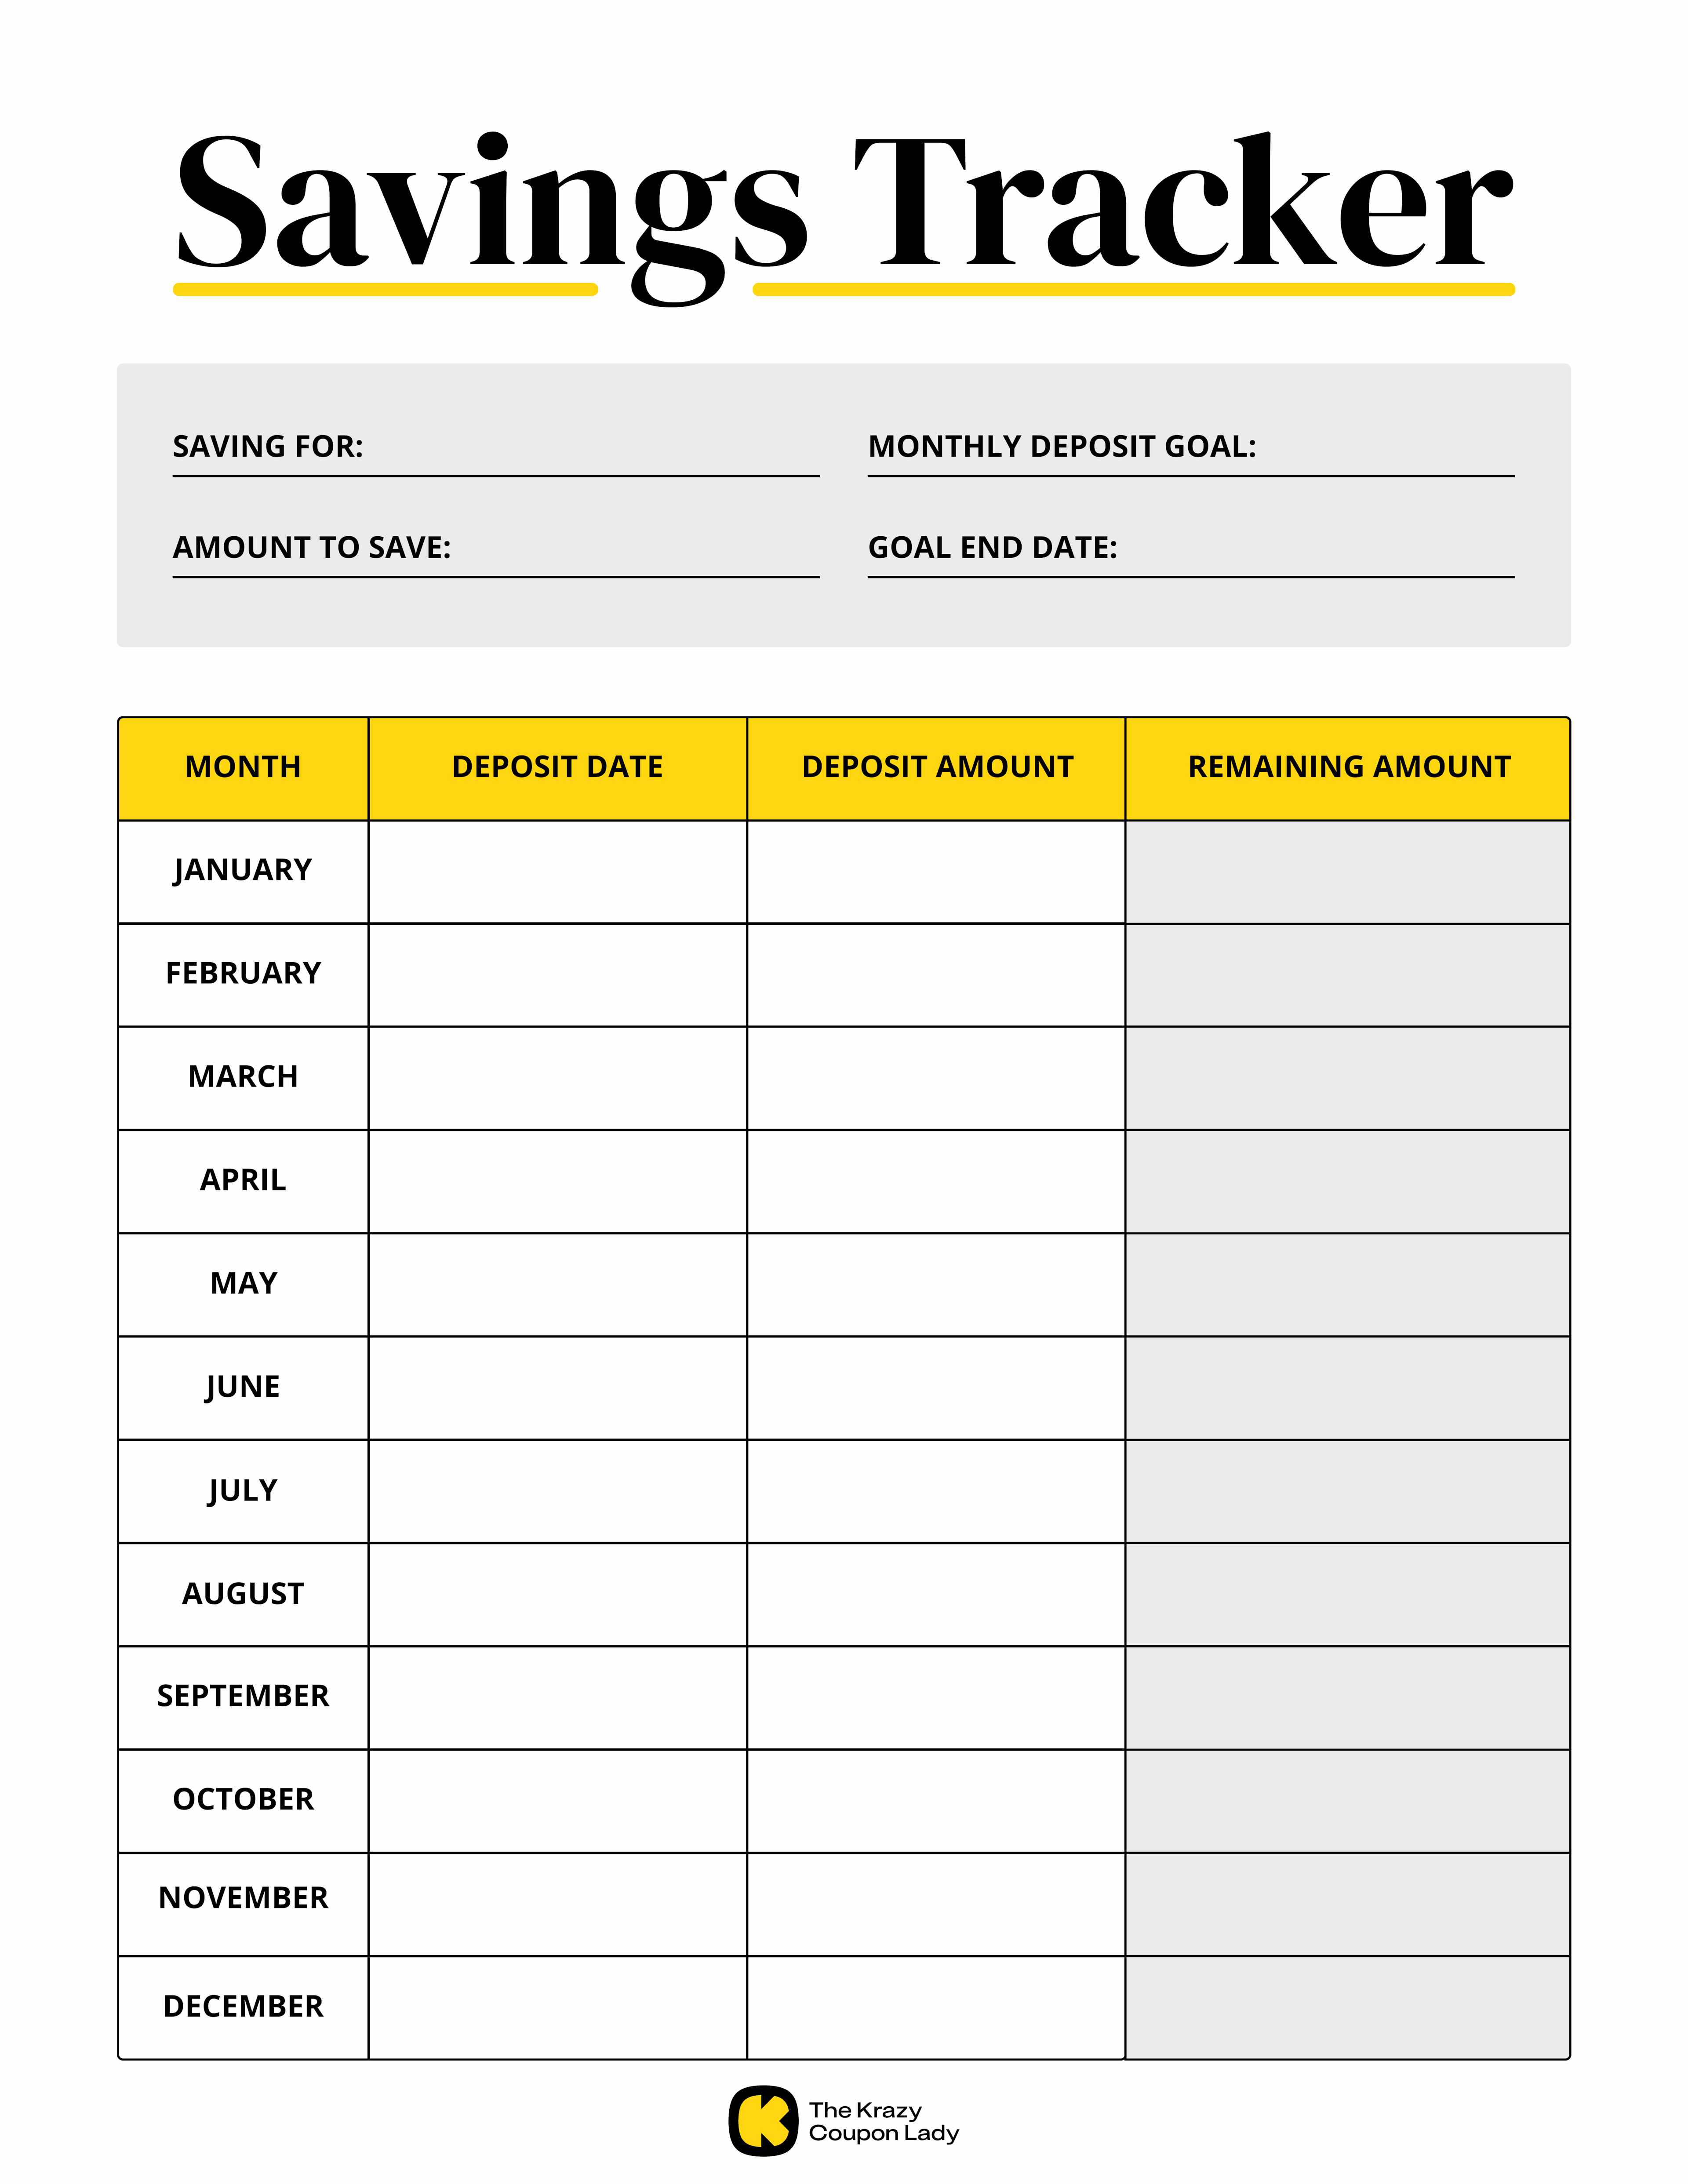 Savings Tracker printable